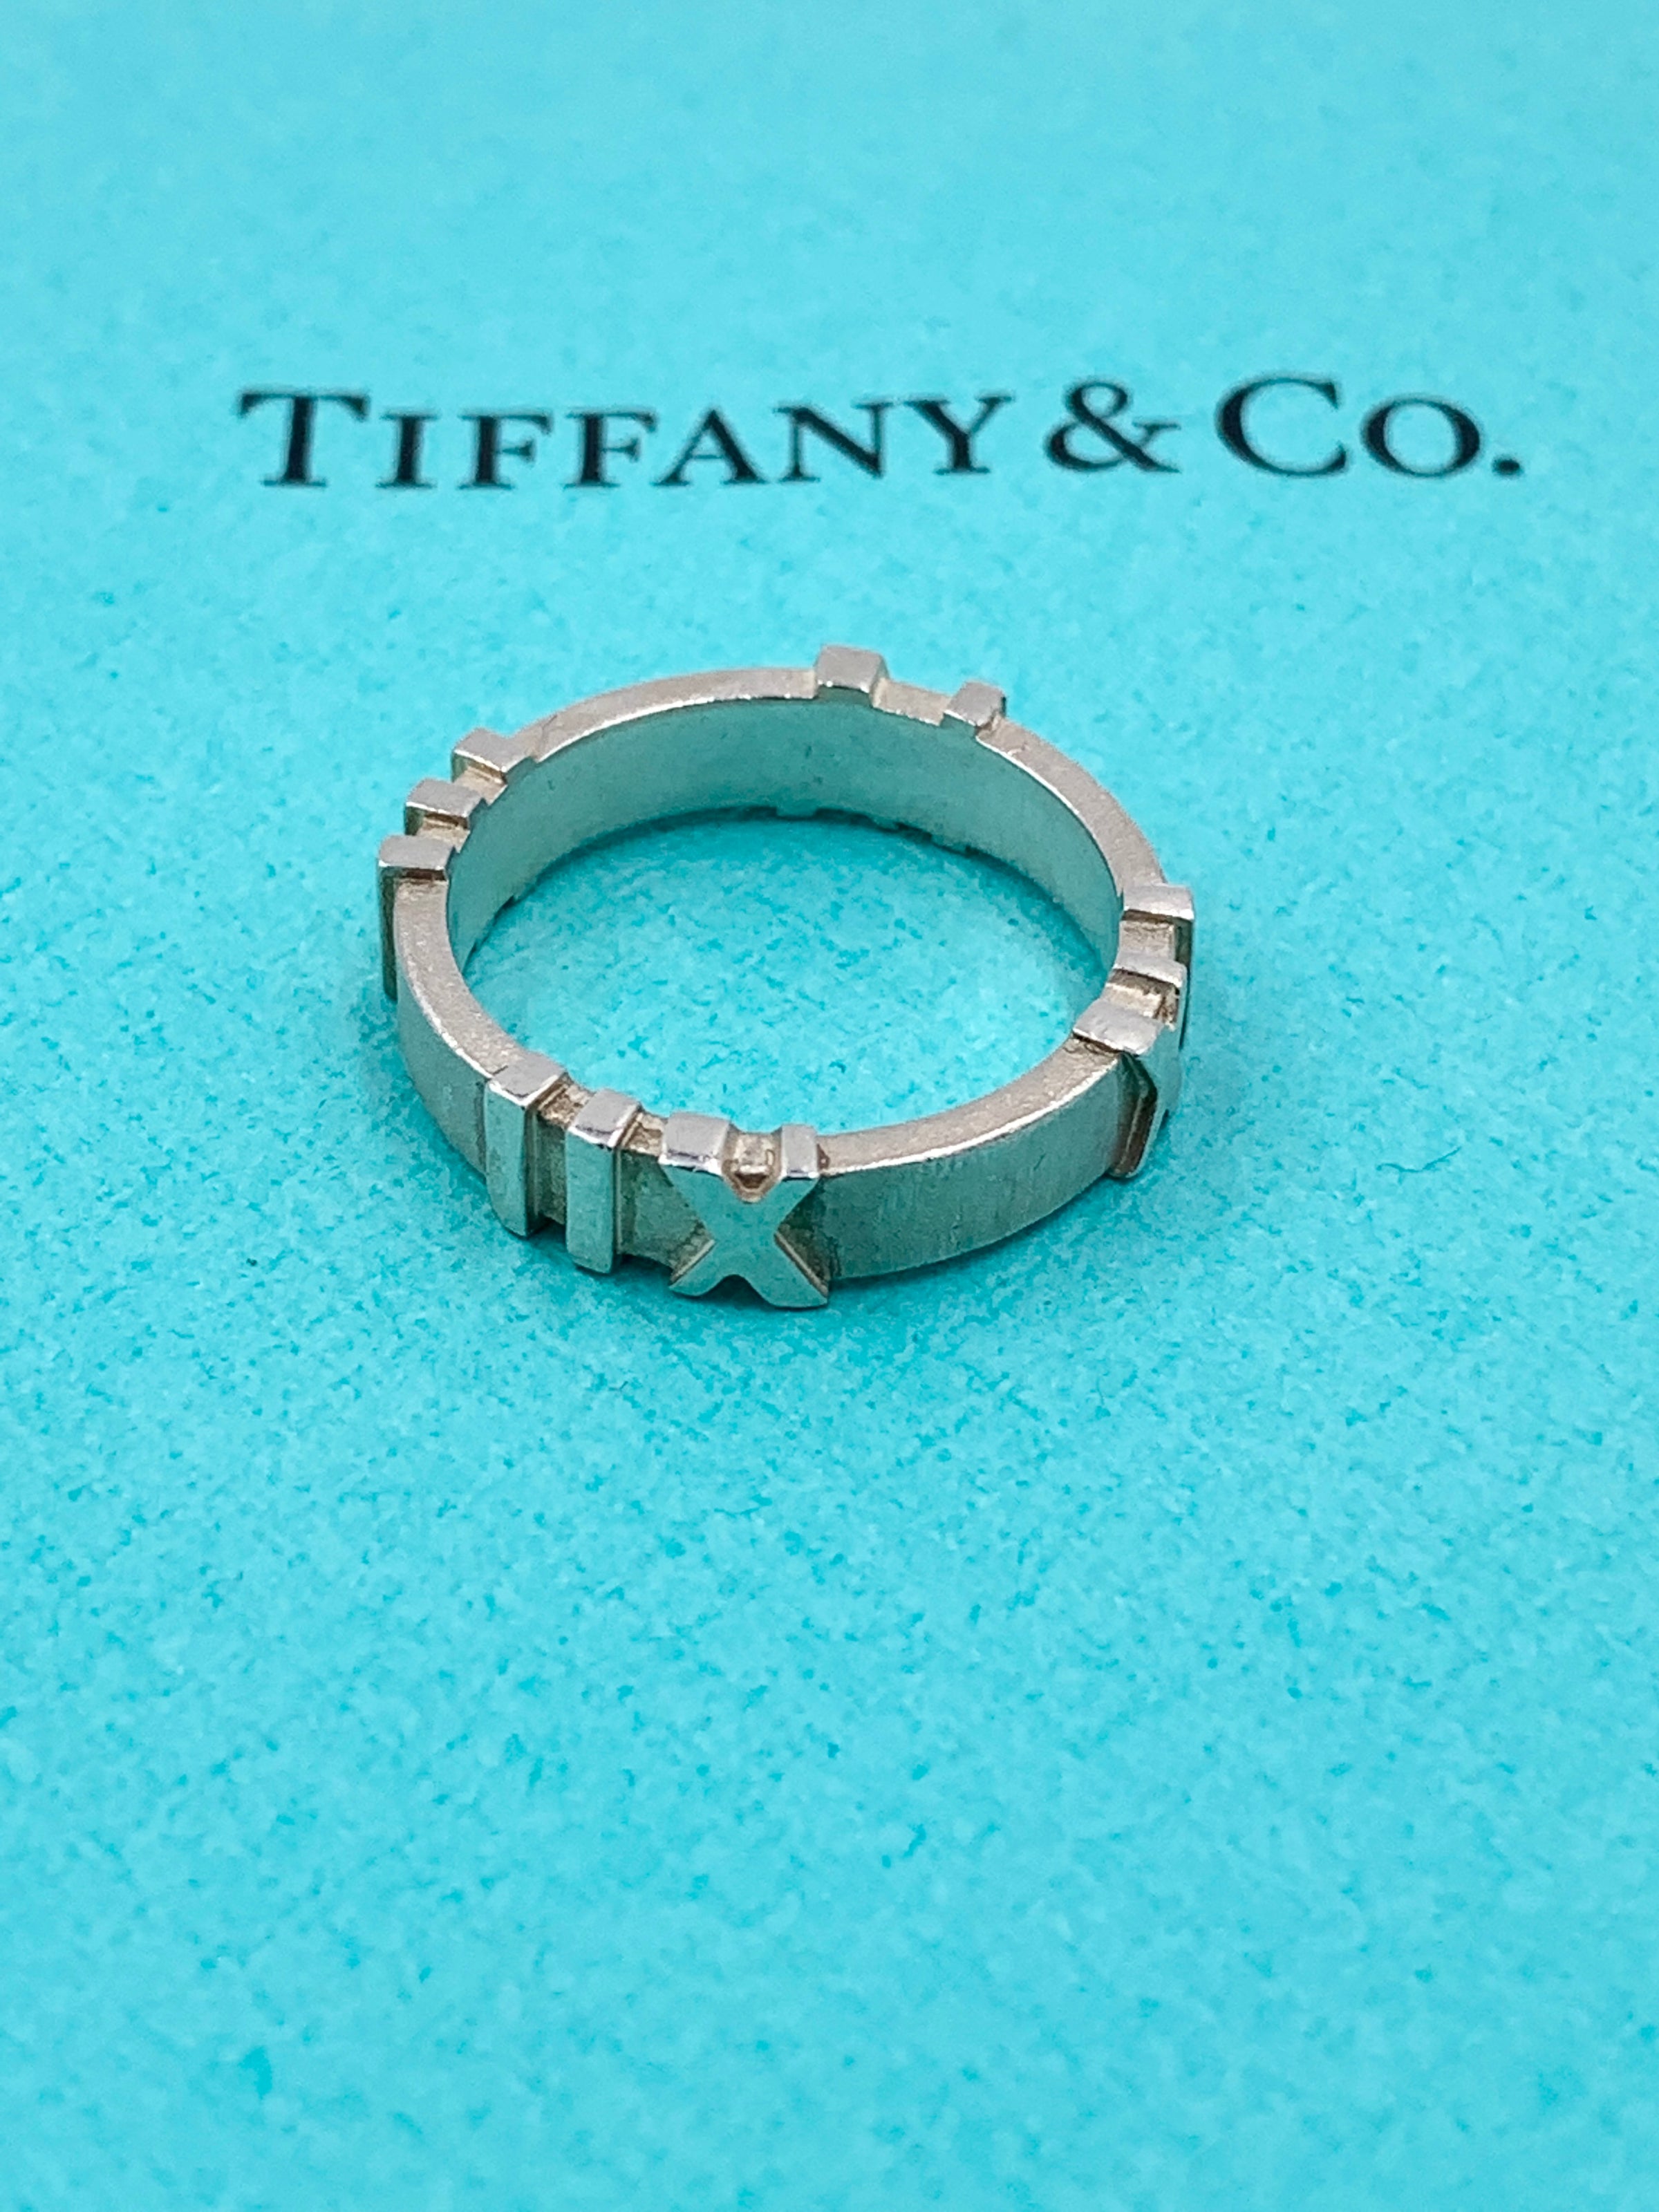 Tiffany co ring size - Gem